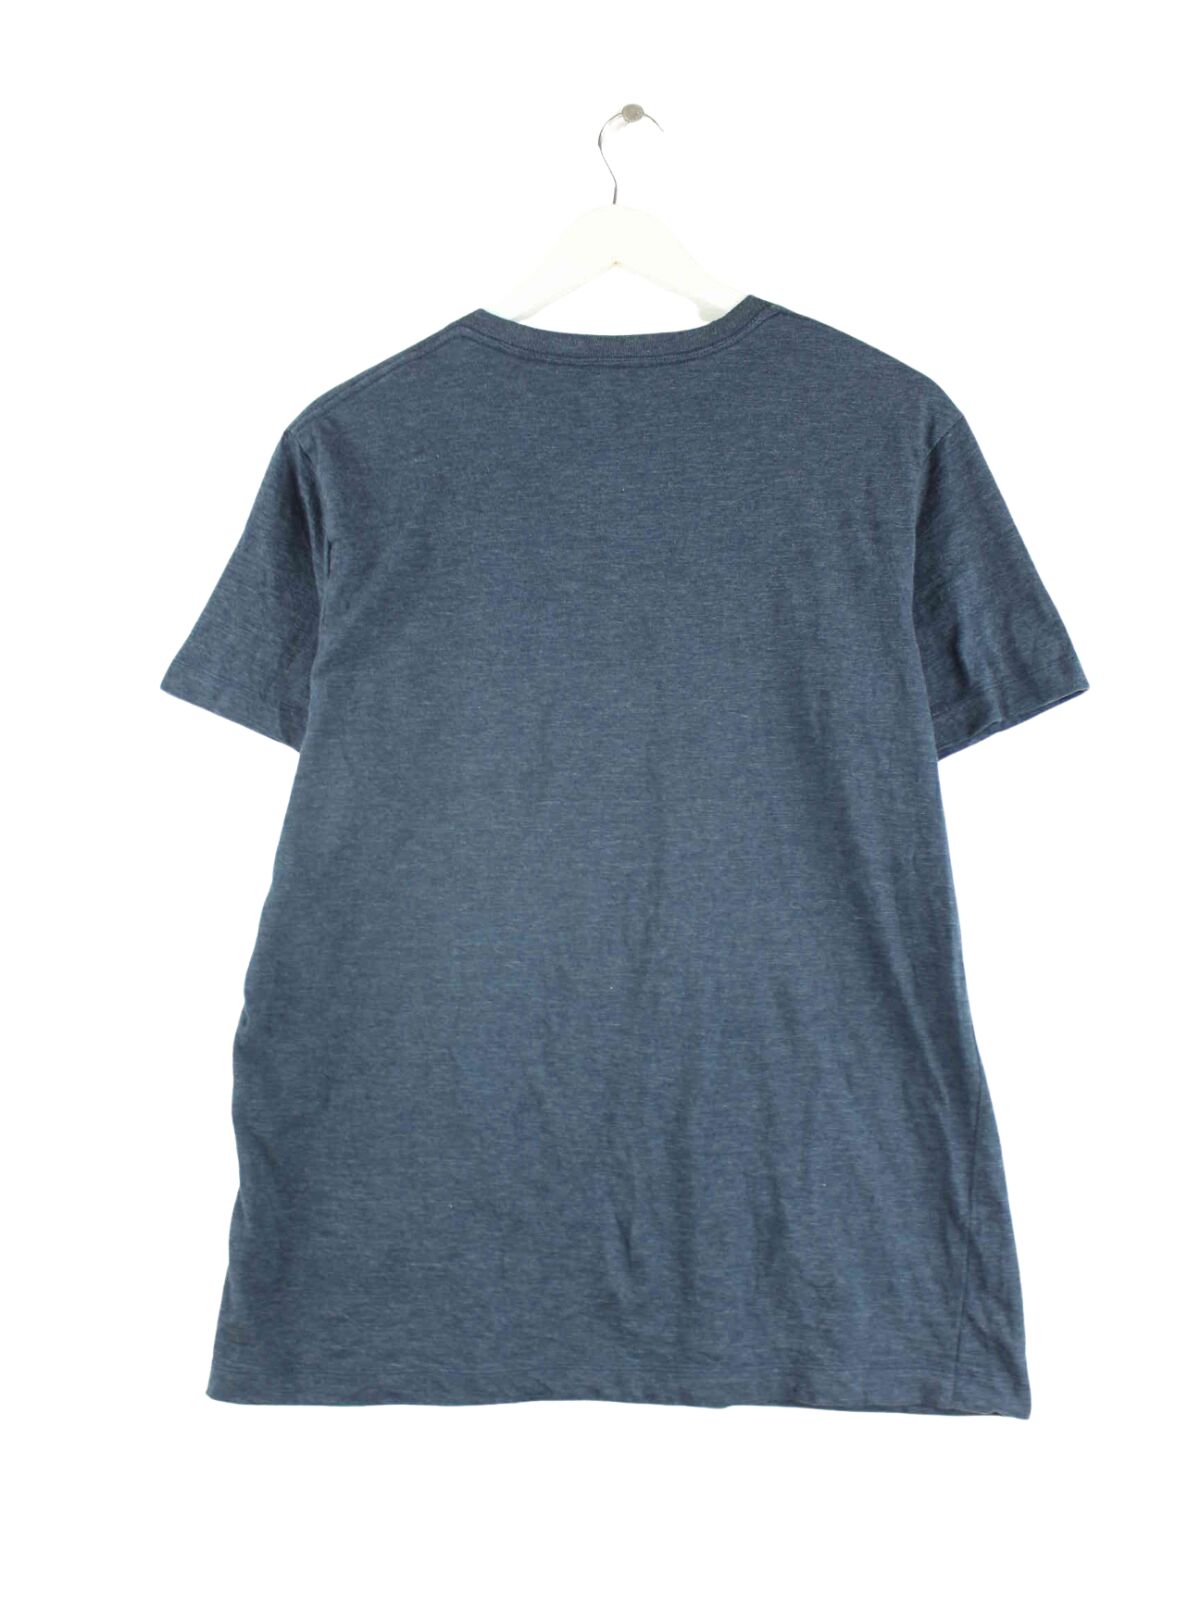 Levi's Basic T-Shirt Blau L (back image)